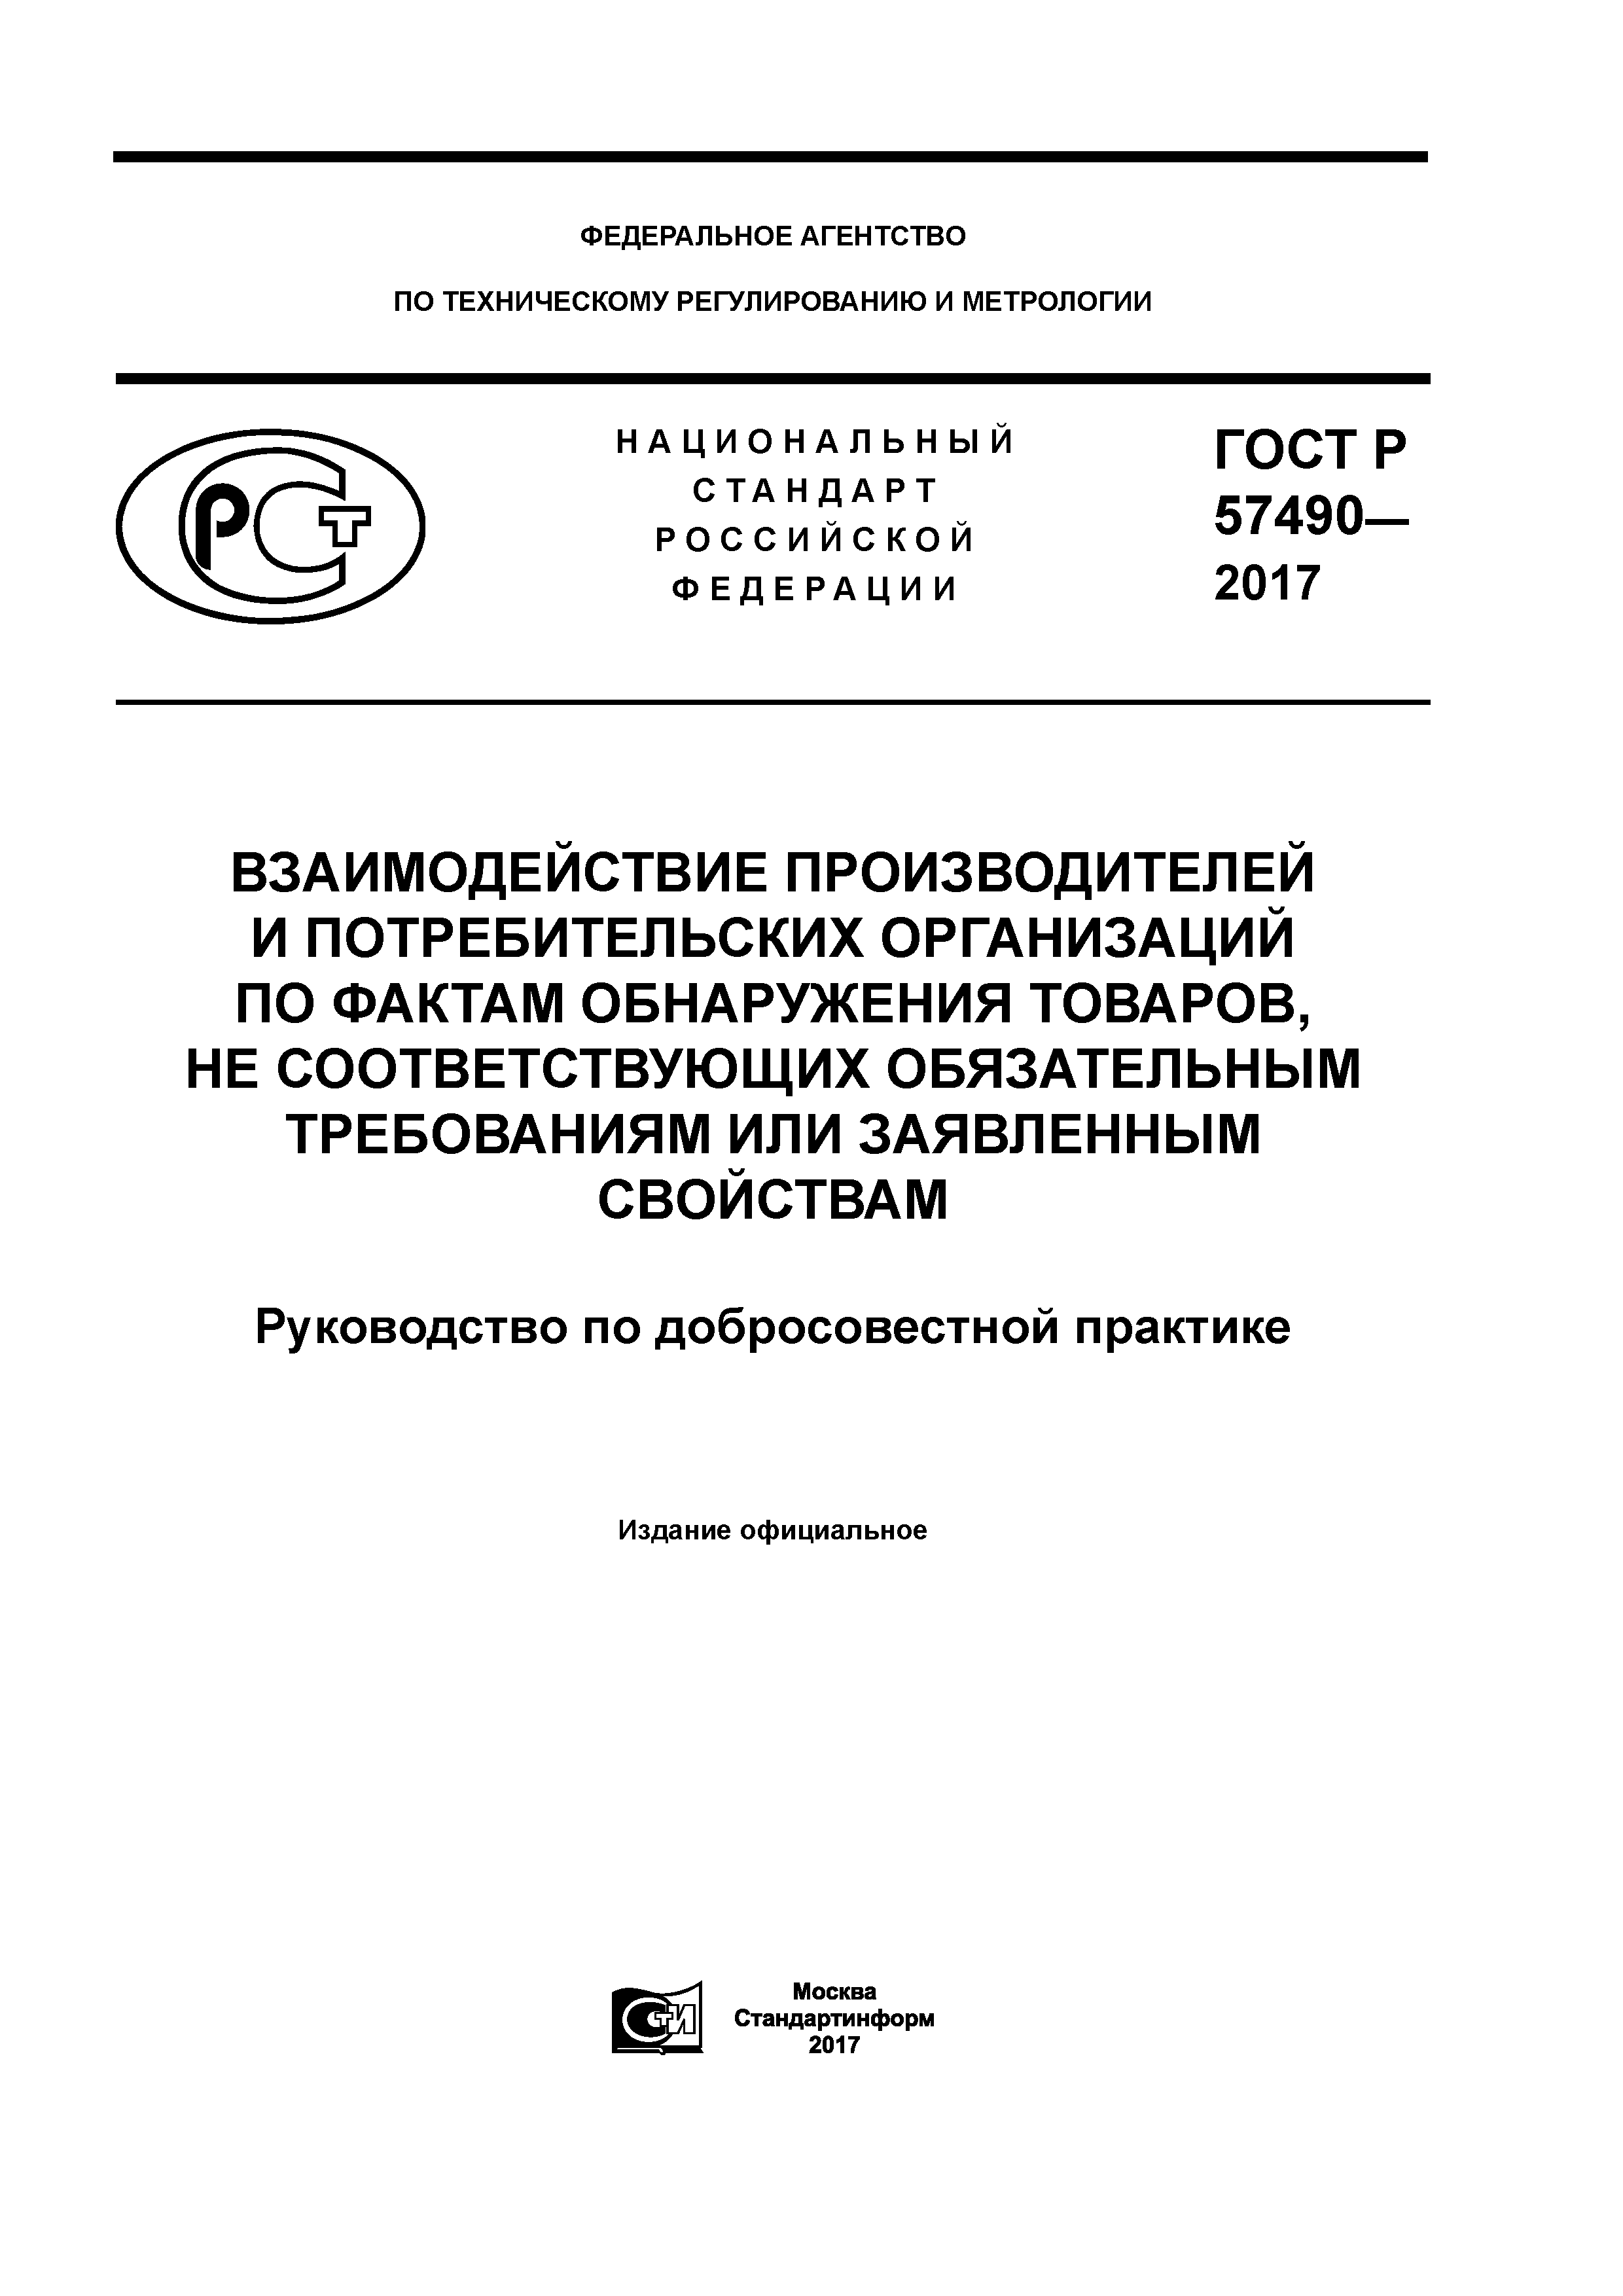 ГОСТ Р 57490-2017